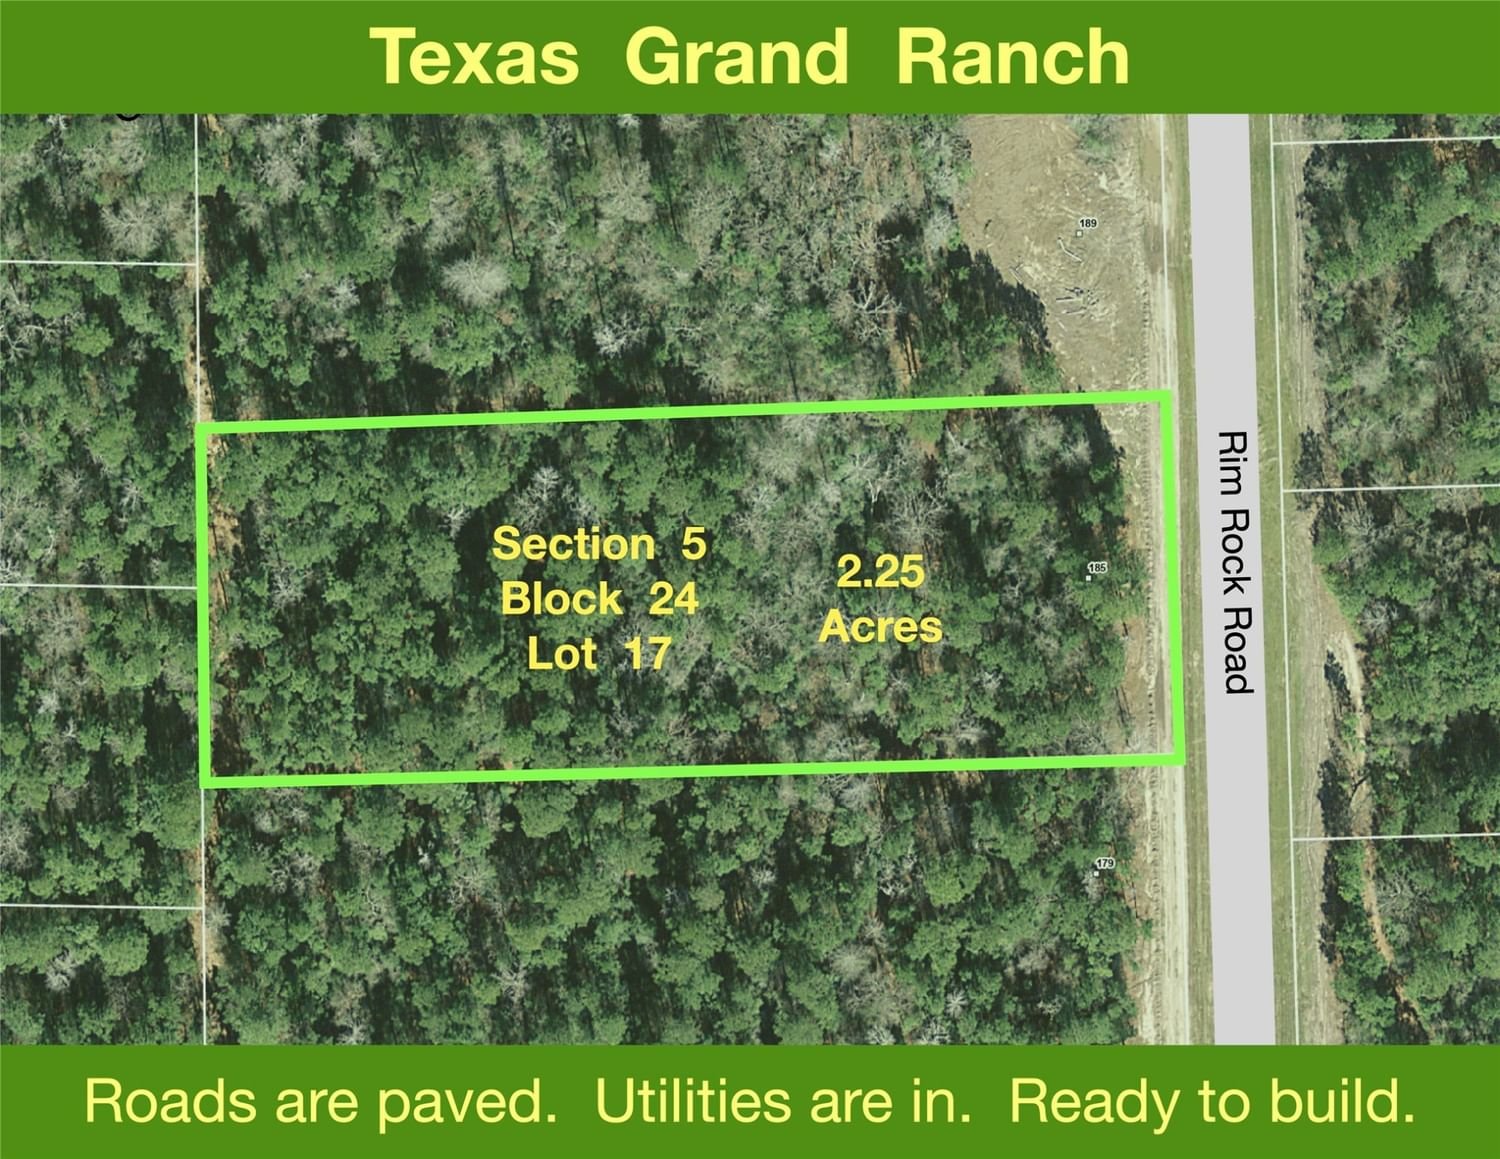 Real estate property located at 5-24-17 Rim Rock, Walker, Texas Grand Ranch, Huntsville, TX, US